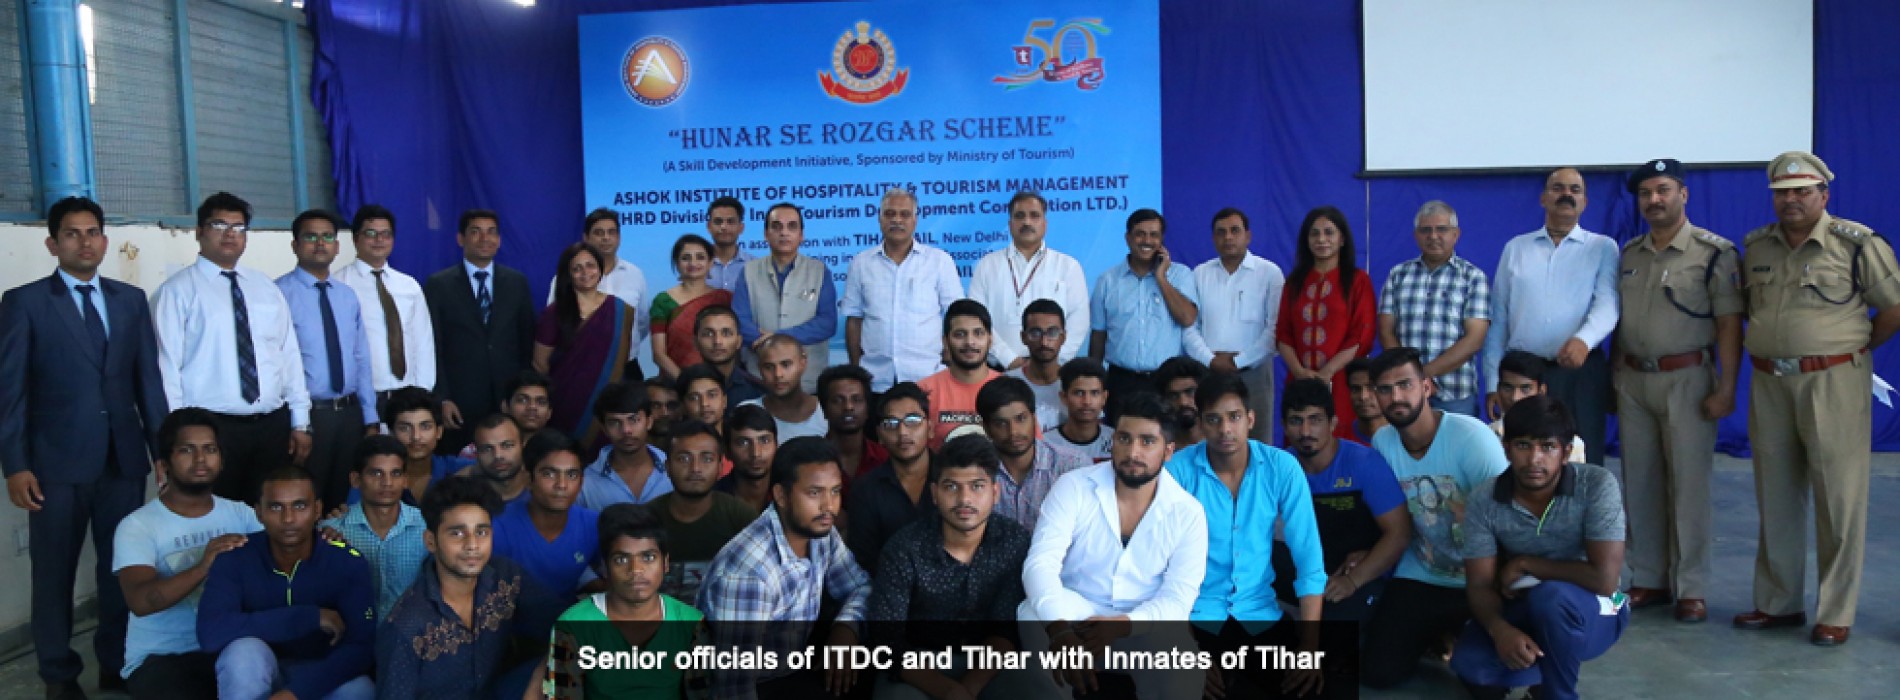 ITDC steps up for Tihar Jail inmates to train them under “Hunar se Rozgar Scheme”